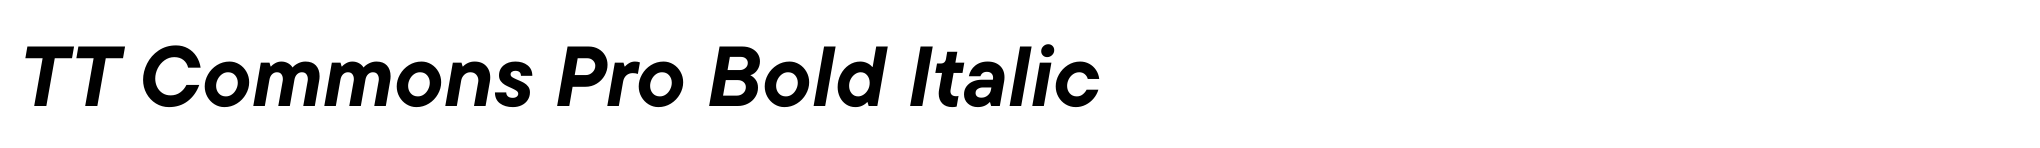 TT Commons Pro Bold Italic image